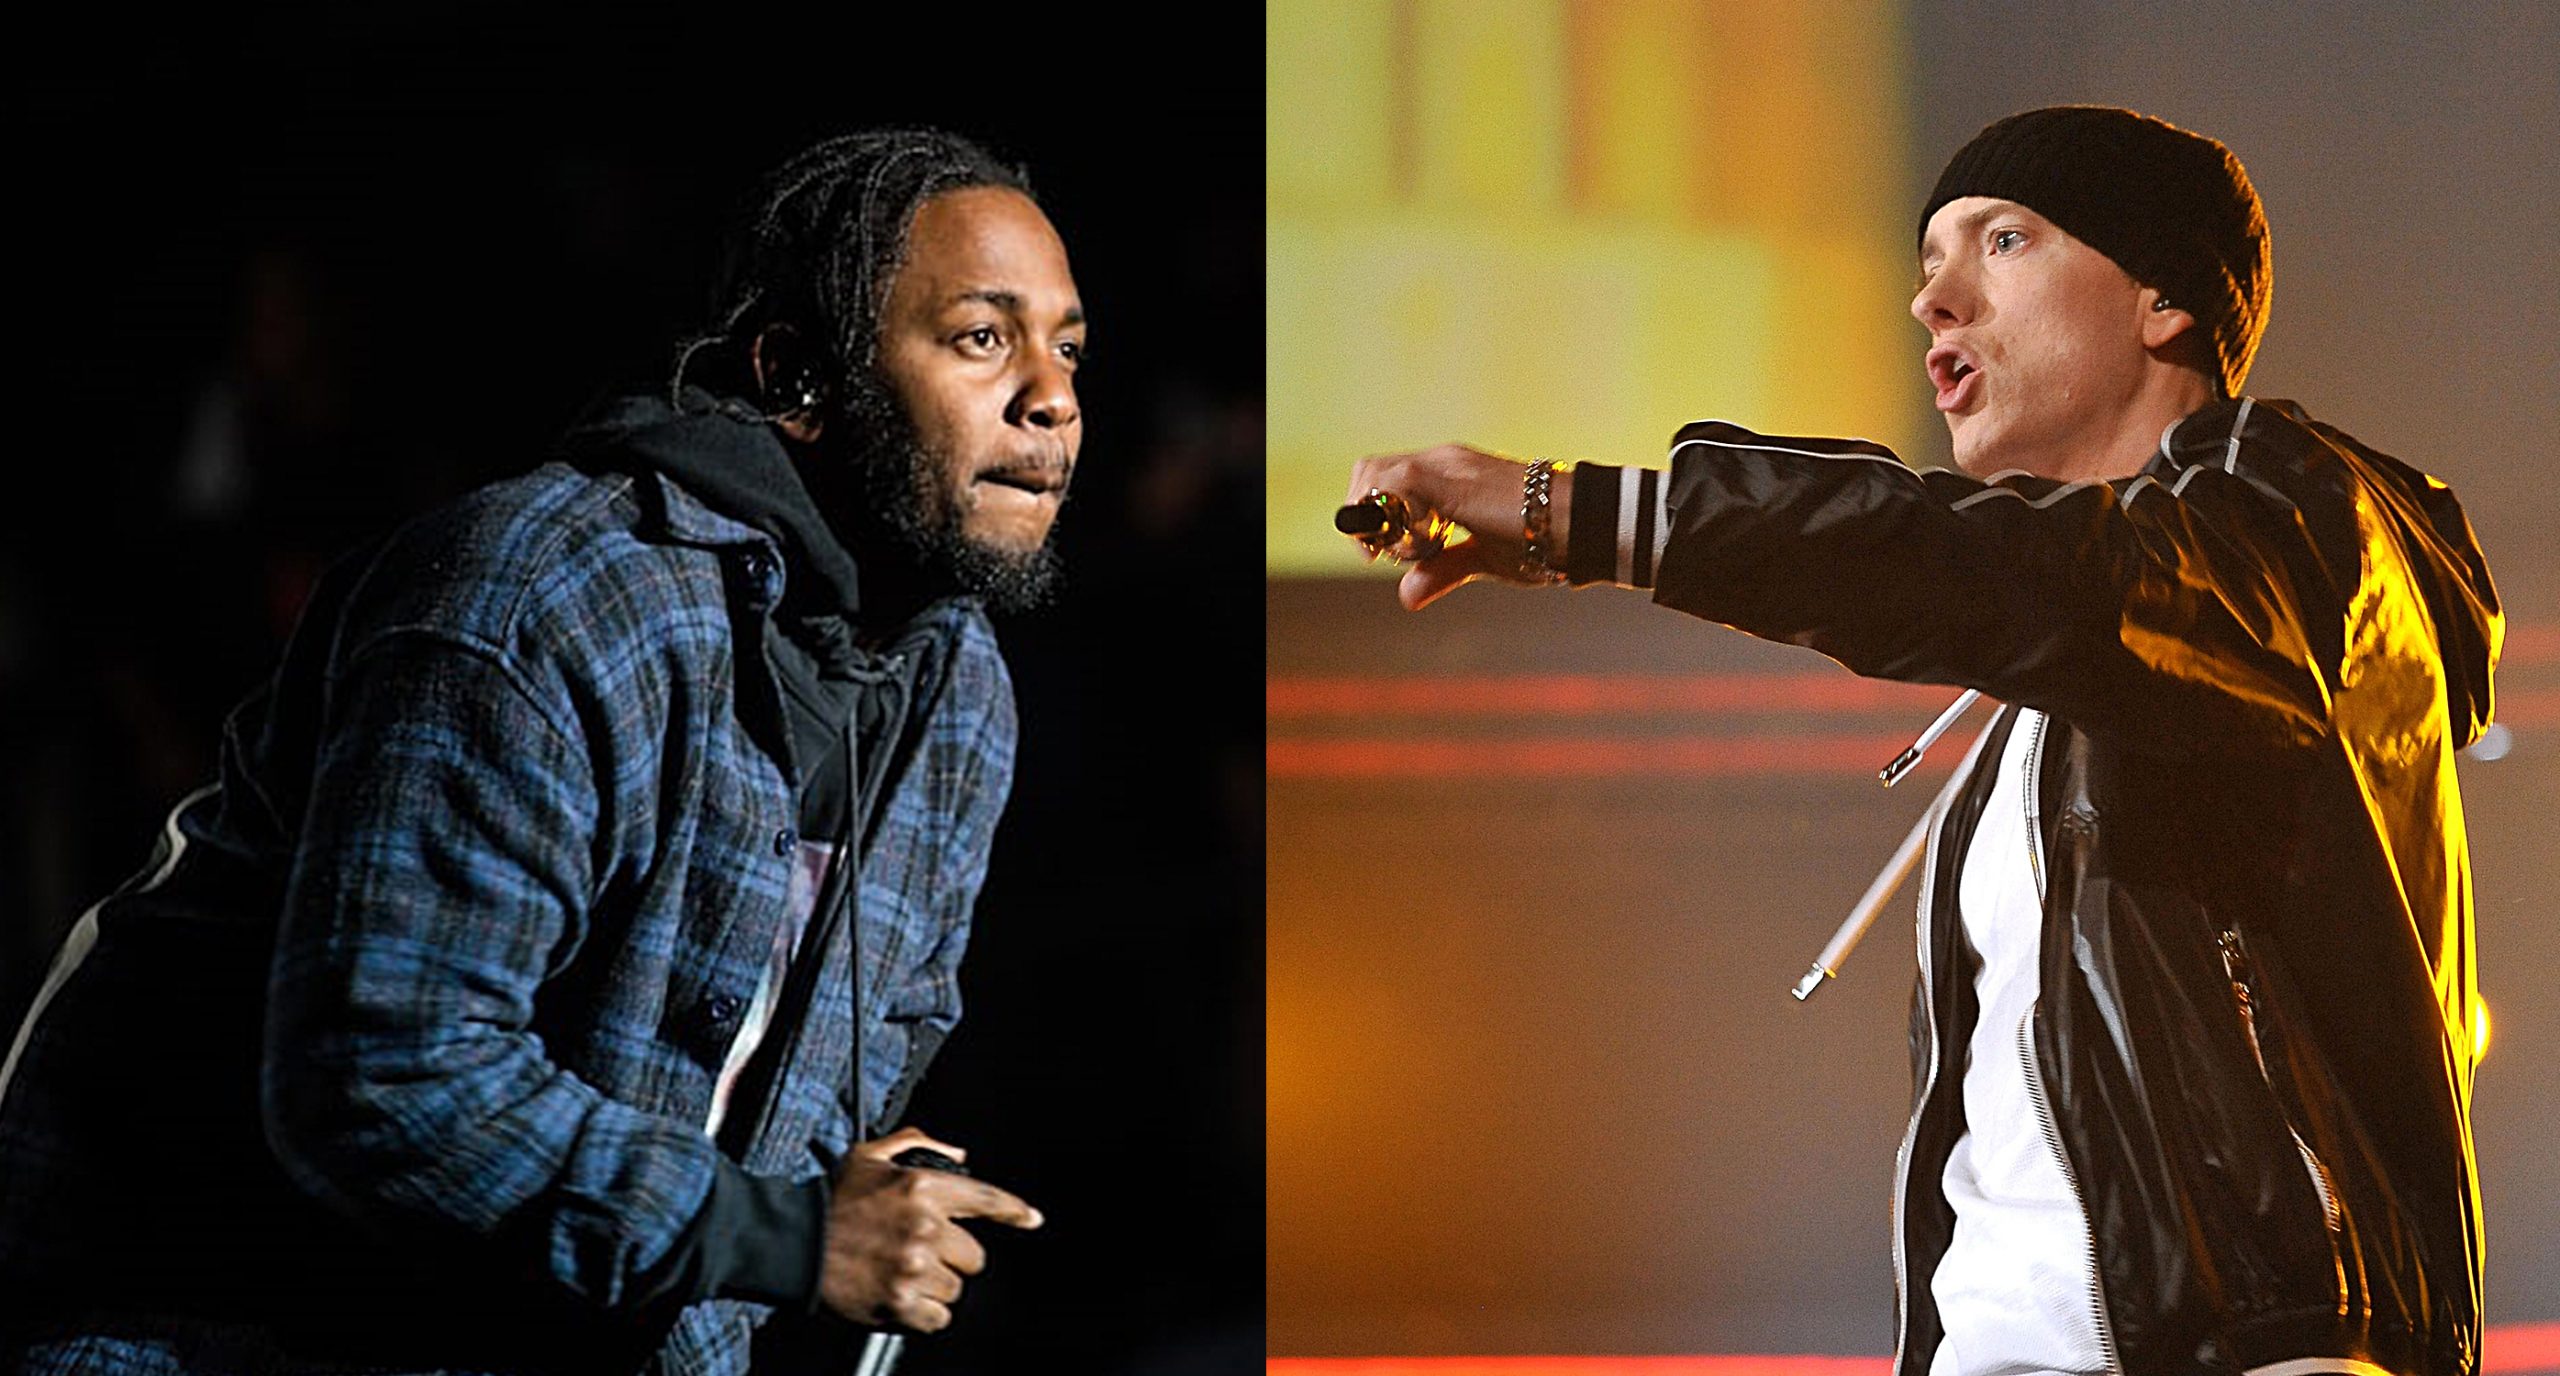 Eminem reacts to Kendrick Lamar's new album "Mr. Morale & Big Steppers"